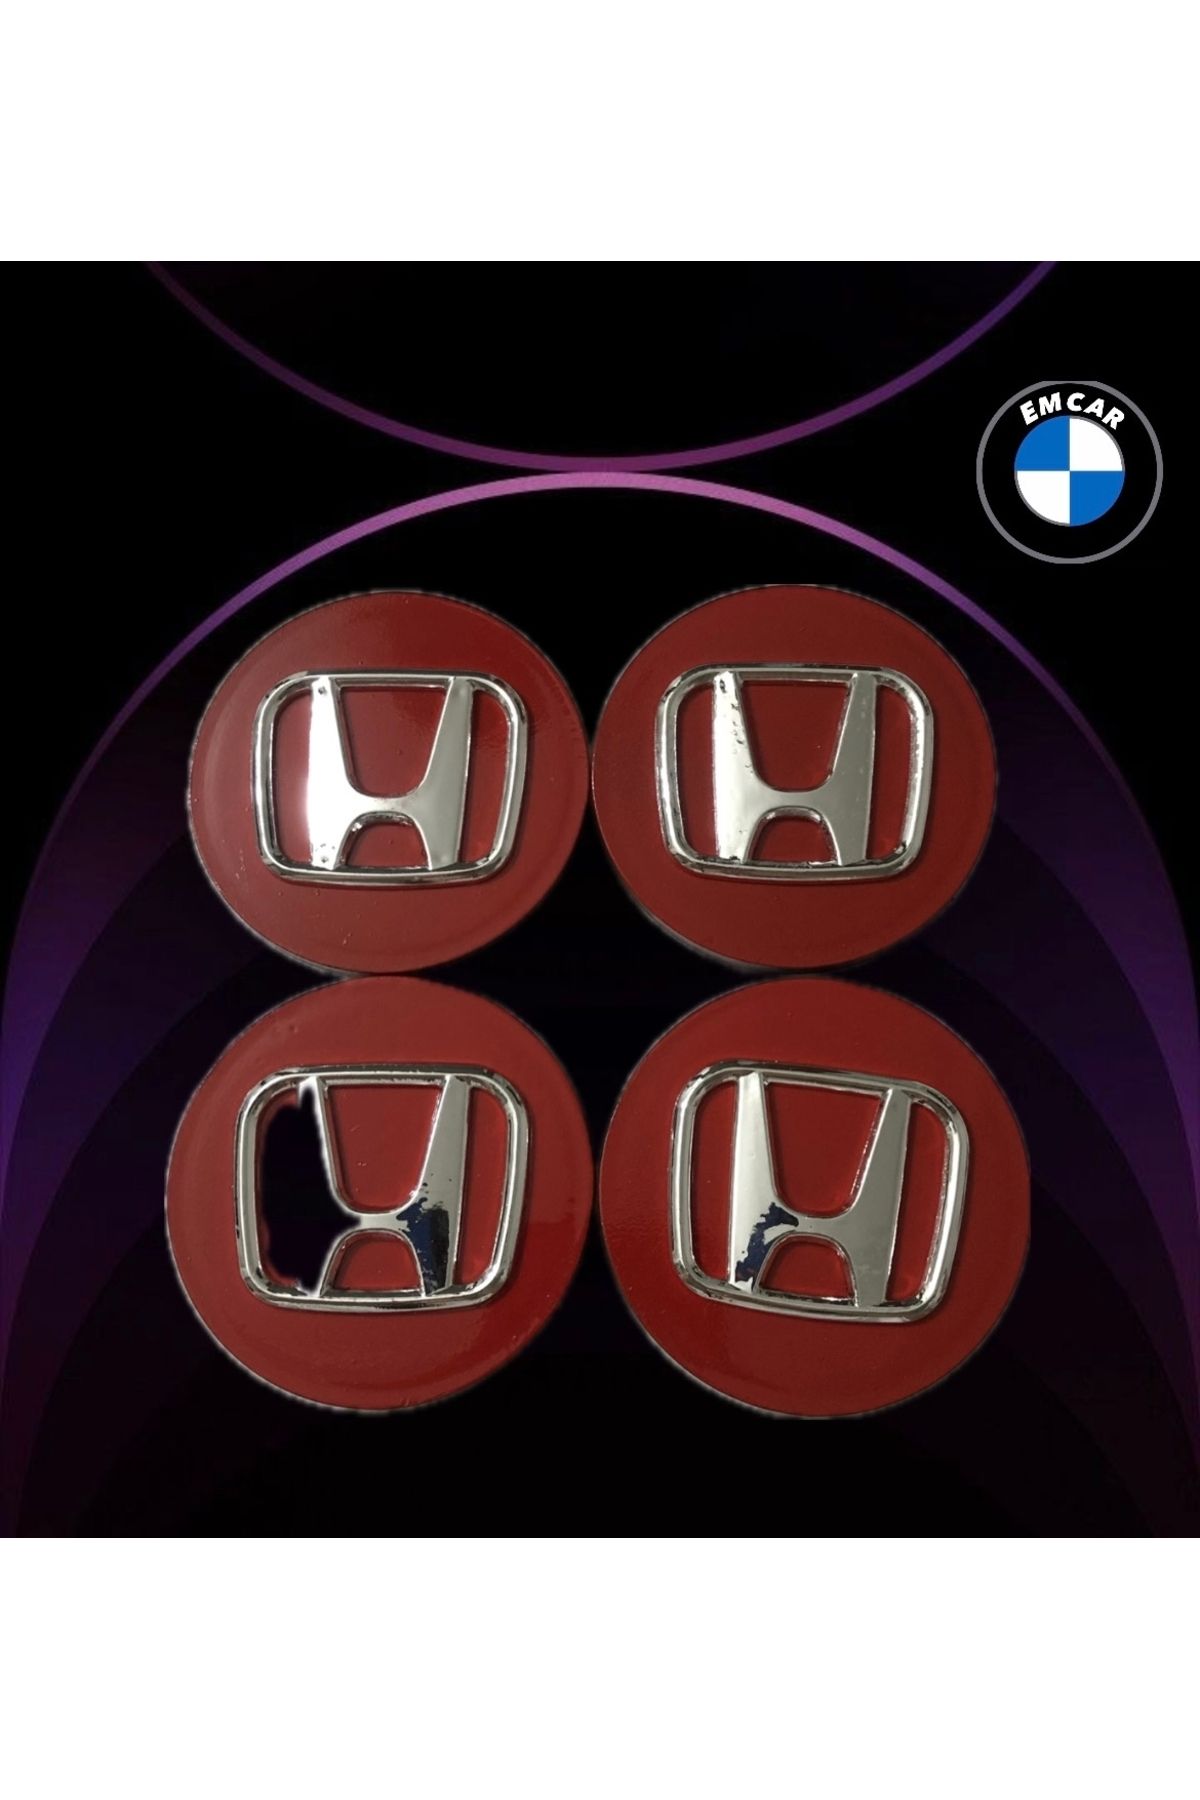 Bursa EMCAR Honda Silver Red 15-16-17 Jant Göbeği 4lü Paket